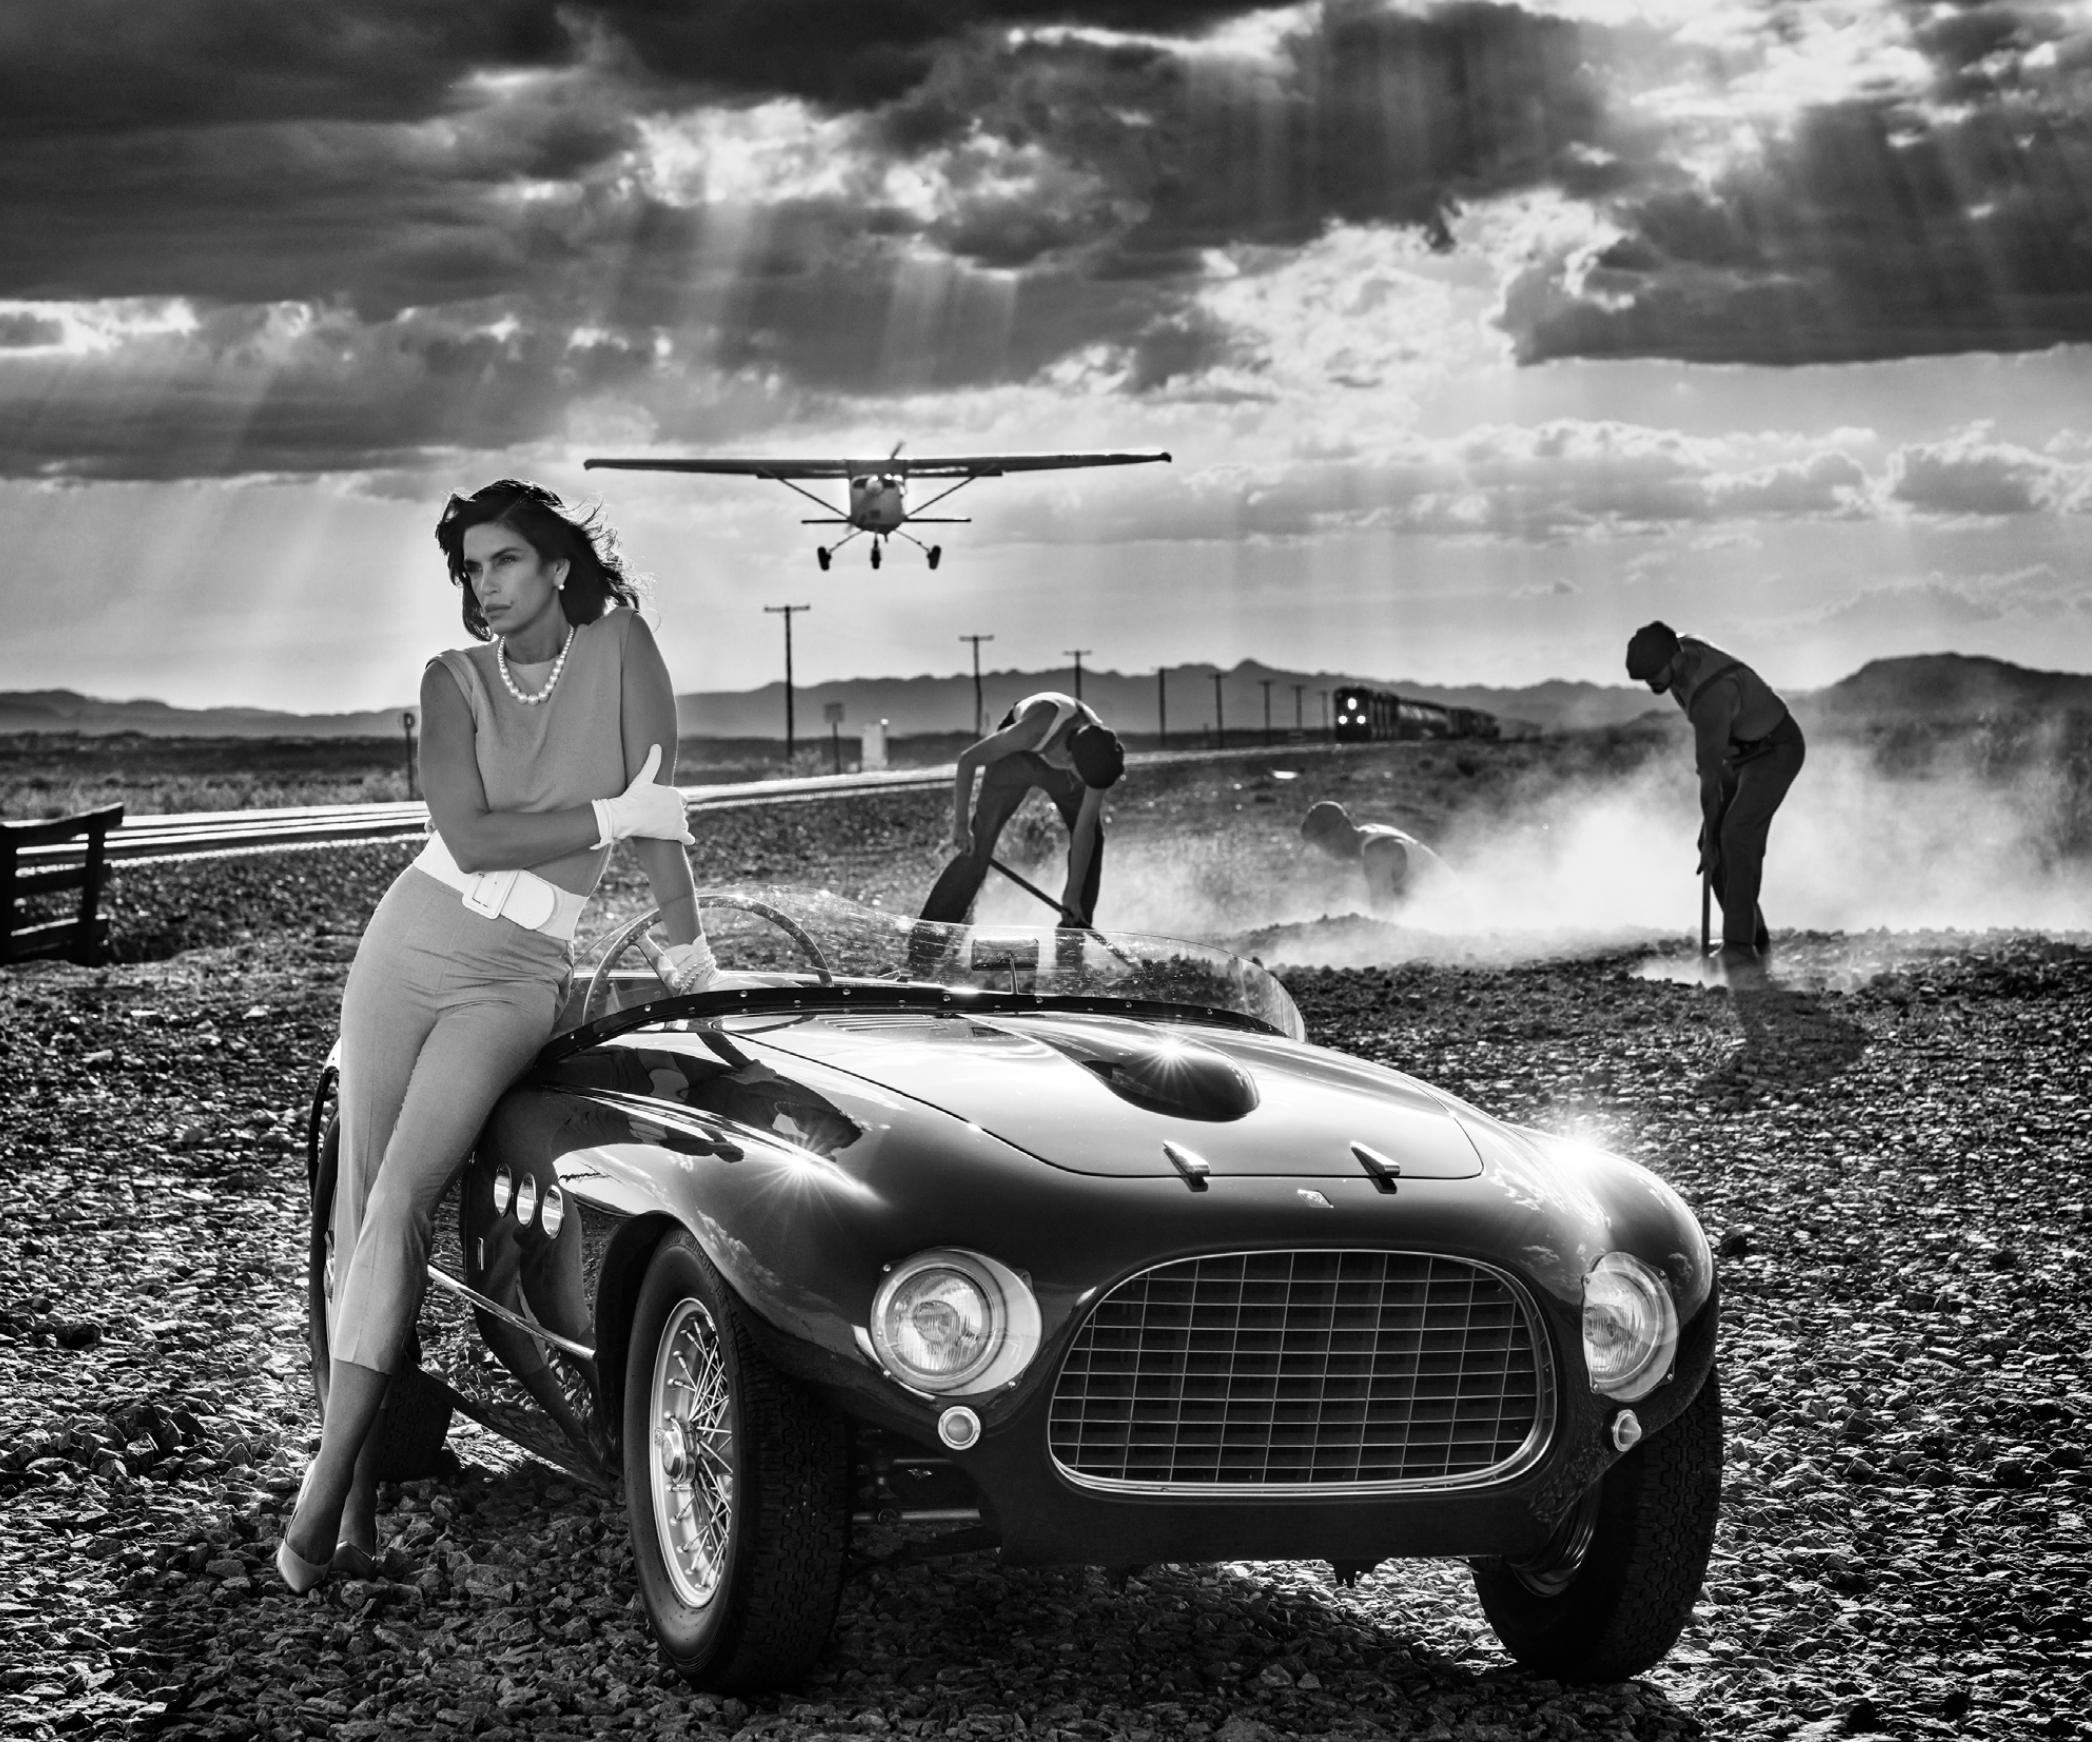 David Yarrow Black and White Photograph - Plane, Trains and Automobiles